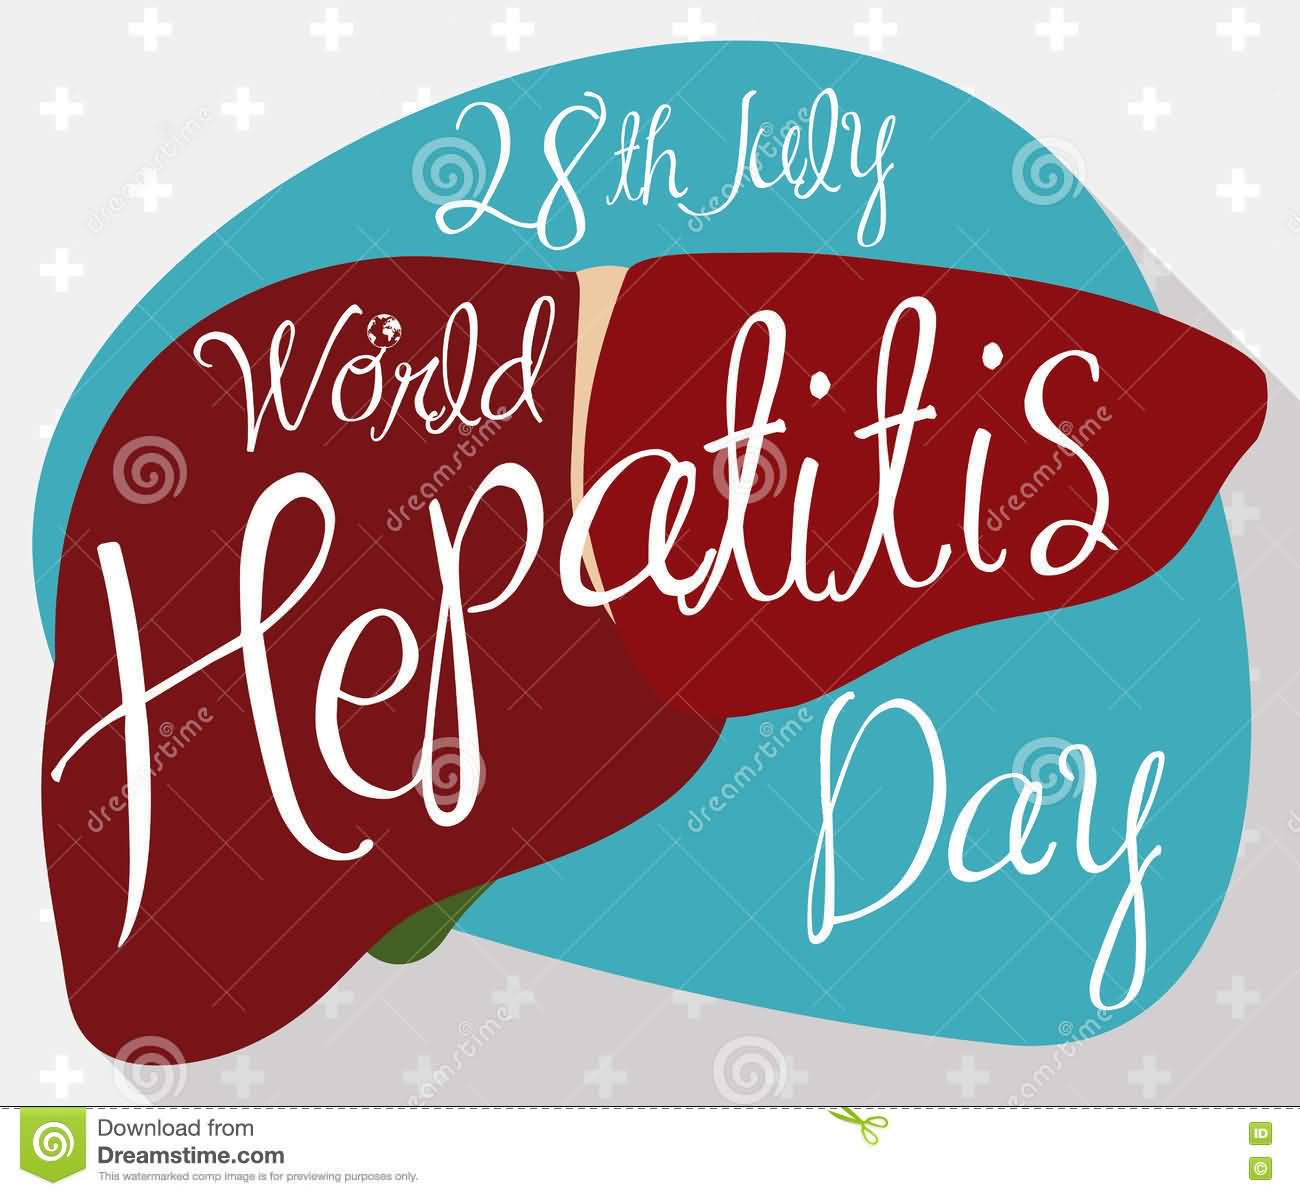 28th July World Hepatitis Day Illustration